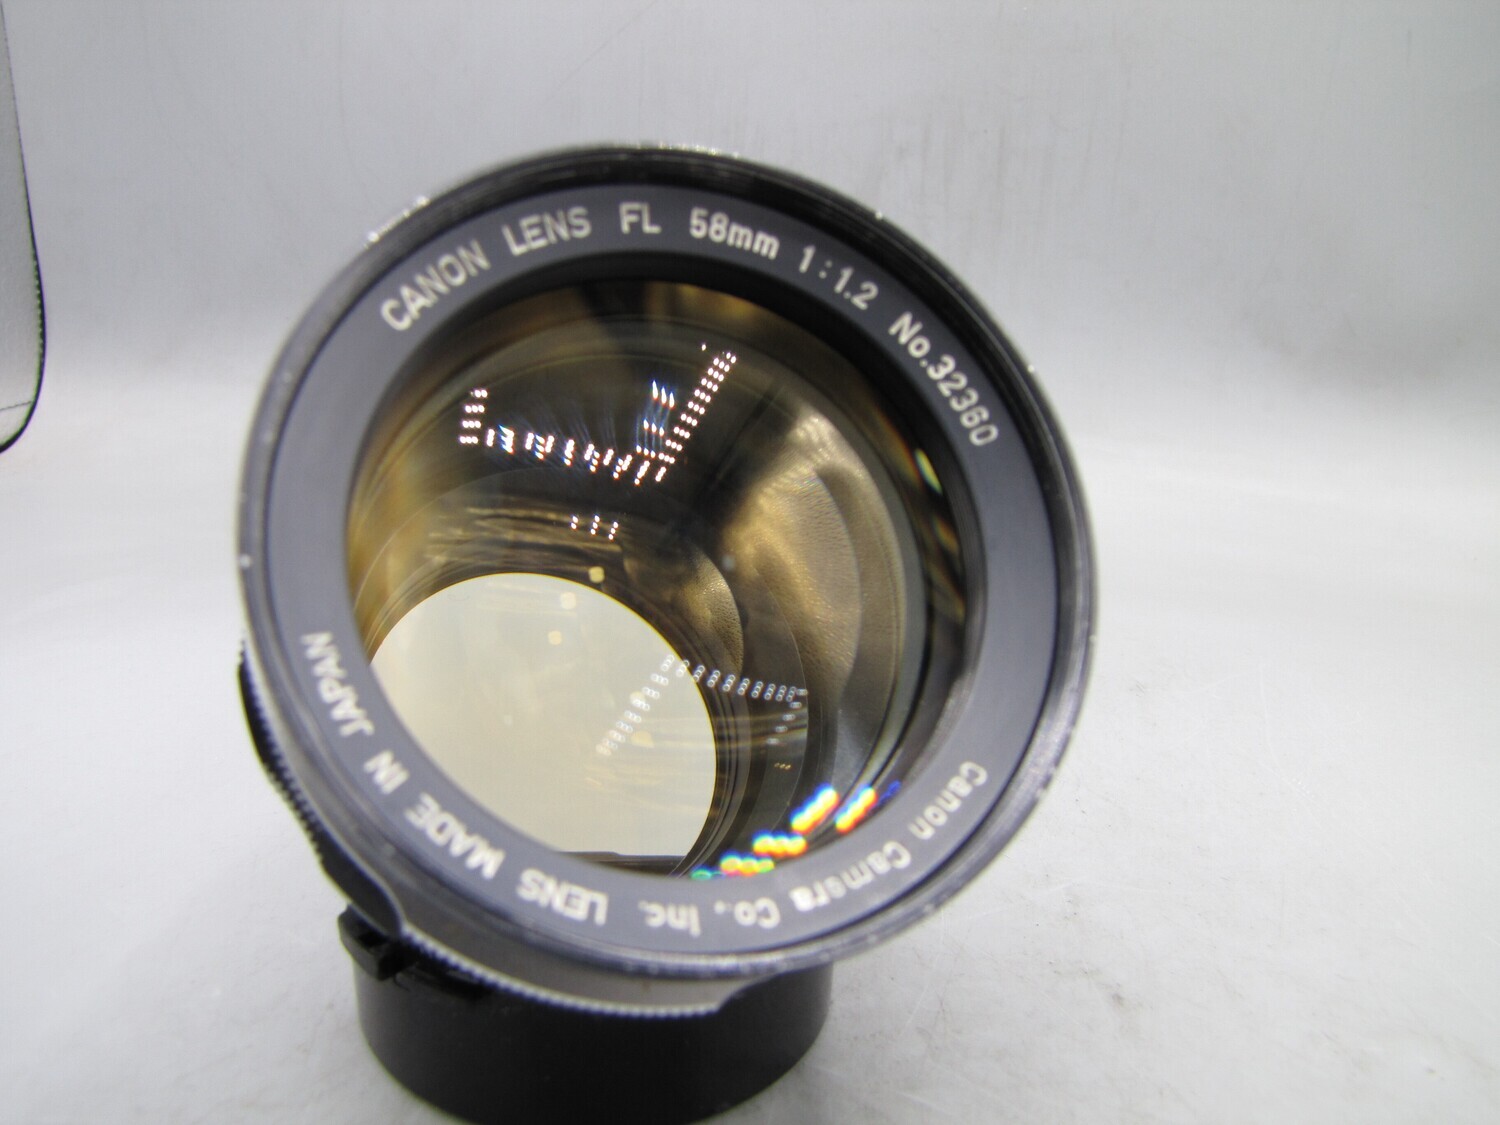 Canon FL 58mm 1:1.2 Lens SR. 32360 Tested - Serviced